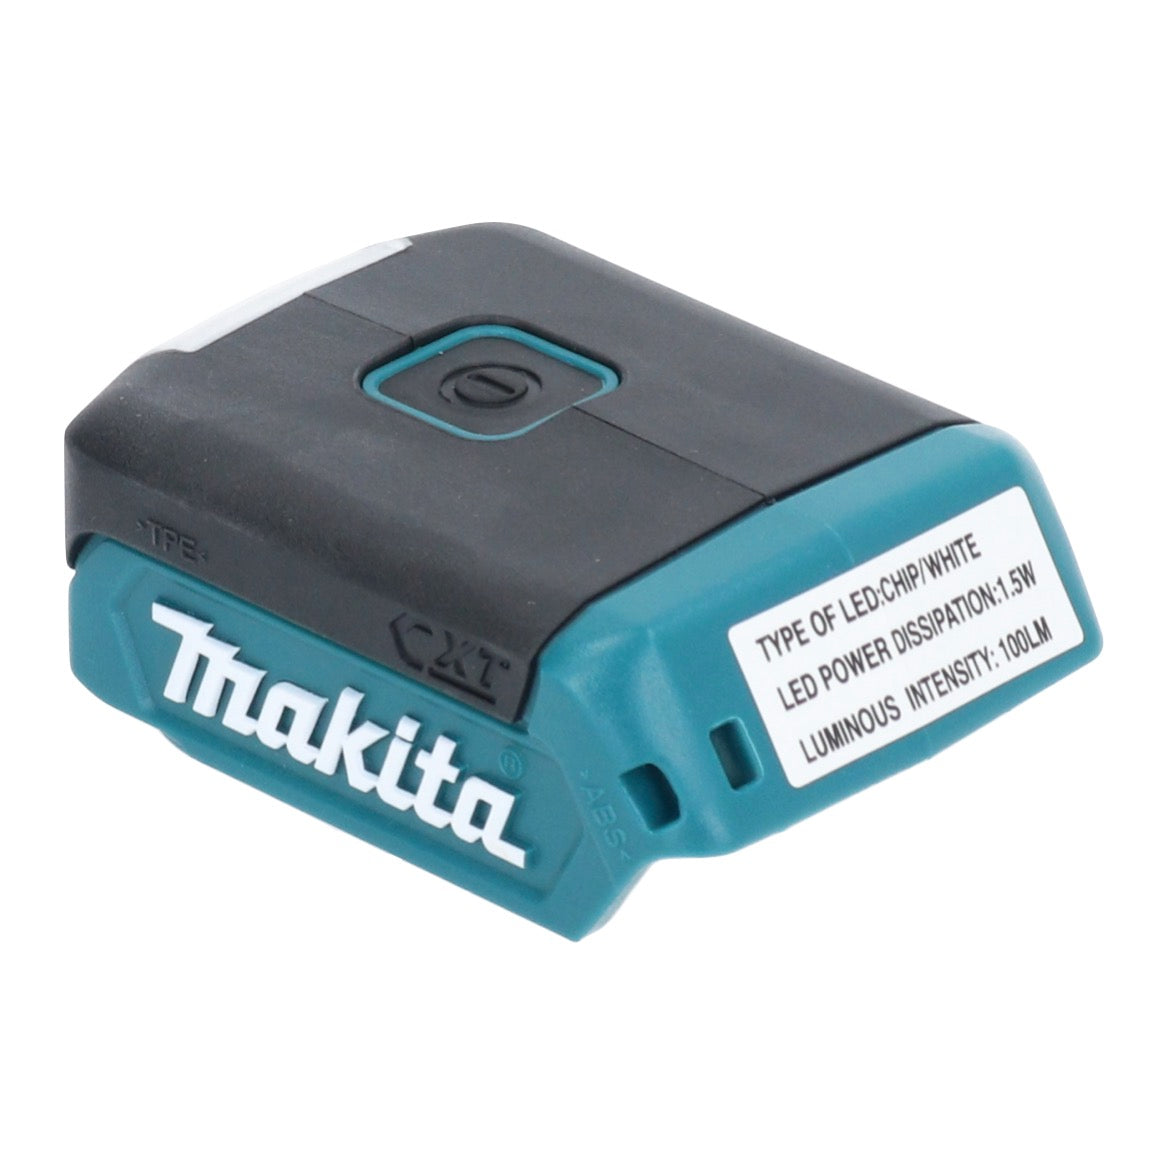 Makita DEBML 103 Akku LED Taschenlampe 12 V max. 100 lm Solo - ohne Akku, ohne Ladegerät